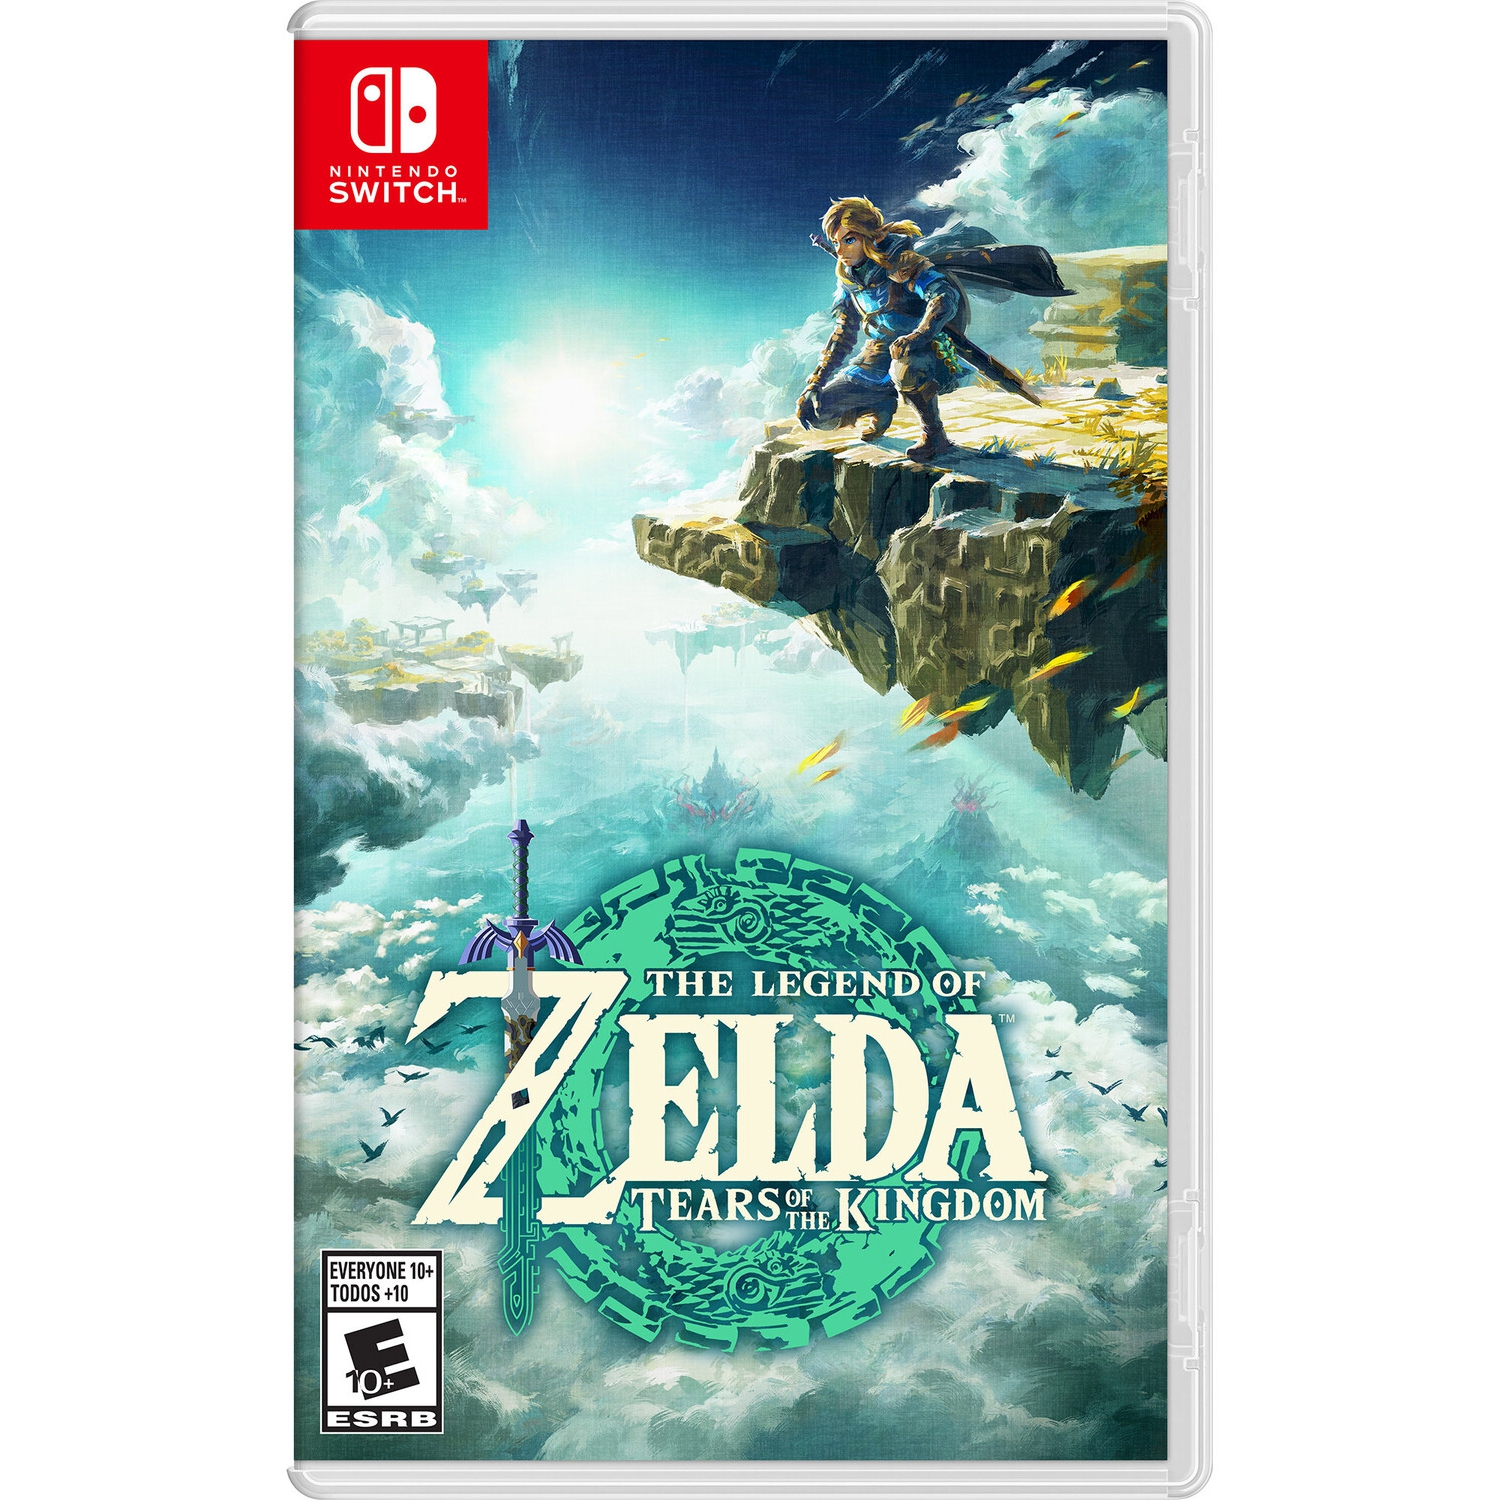 The Legend of Zelda: Tears of the Kingdom for Nintendo Switch [VIDEOGAMES]